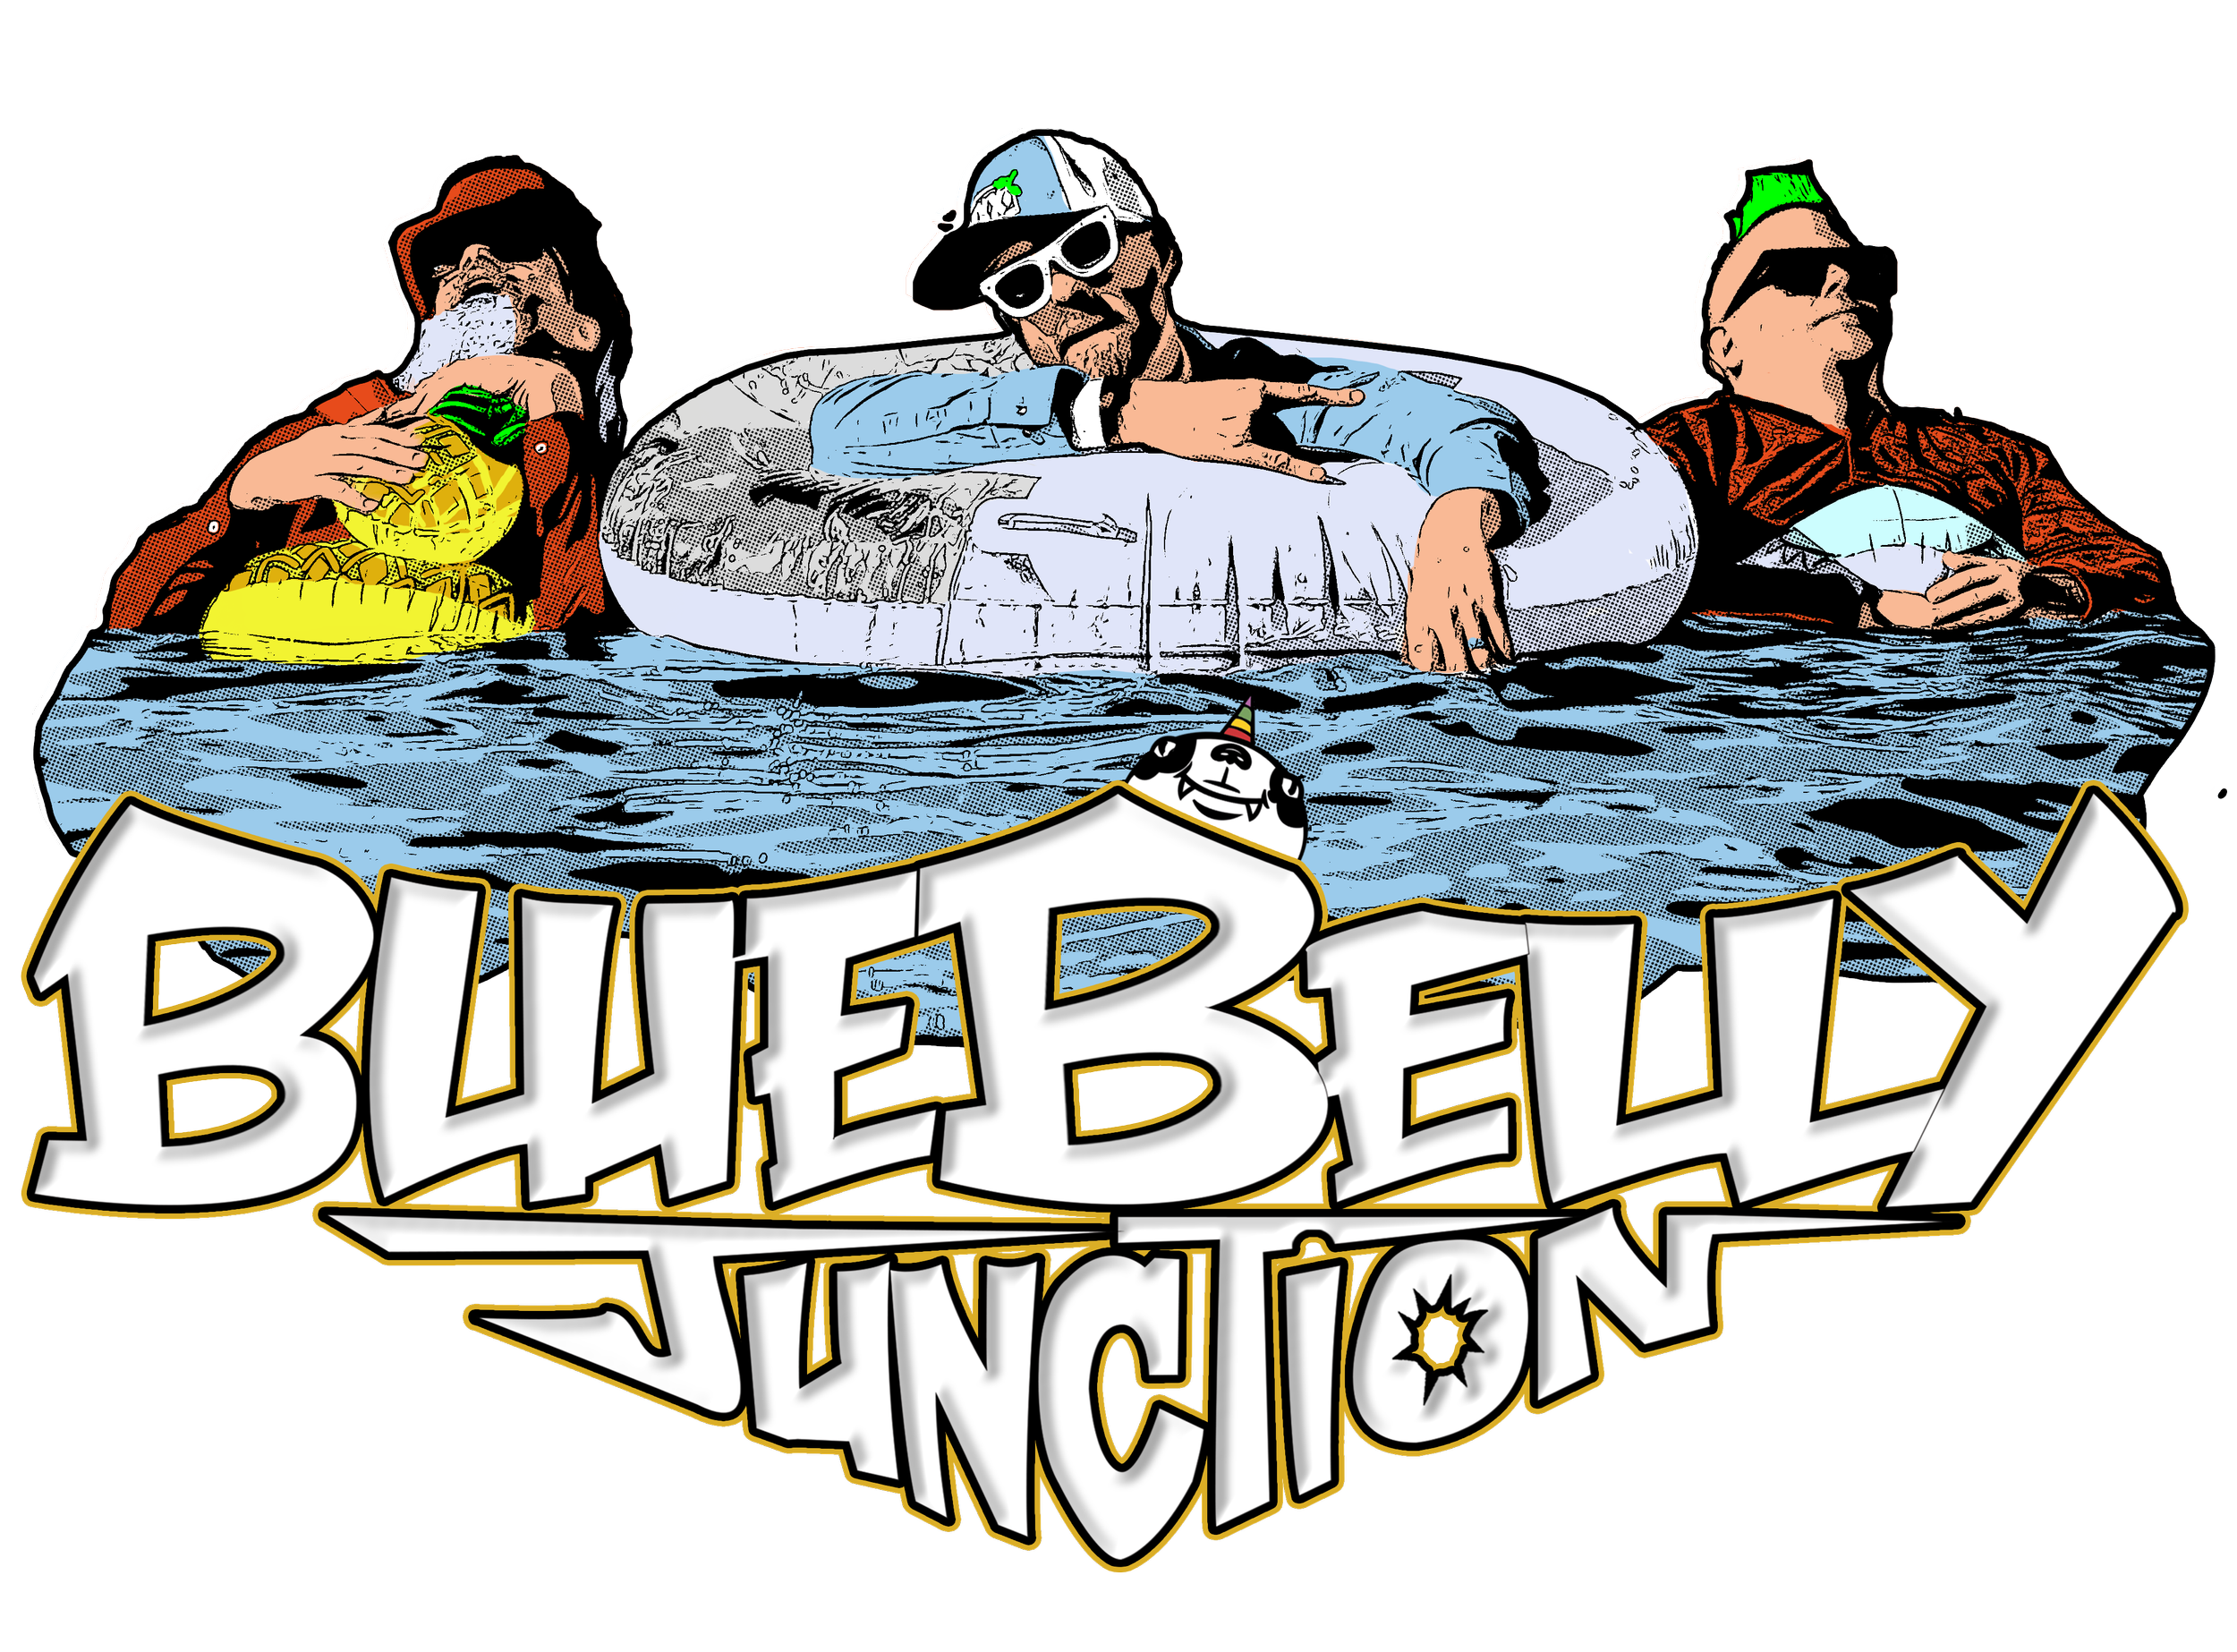 Bluebelly Junction